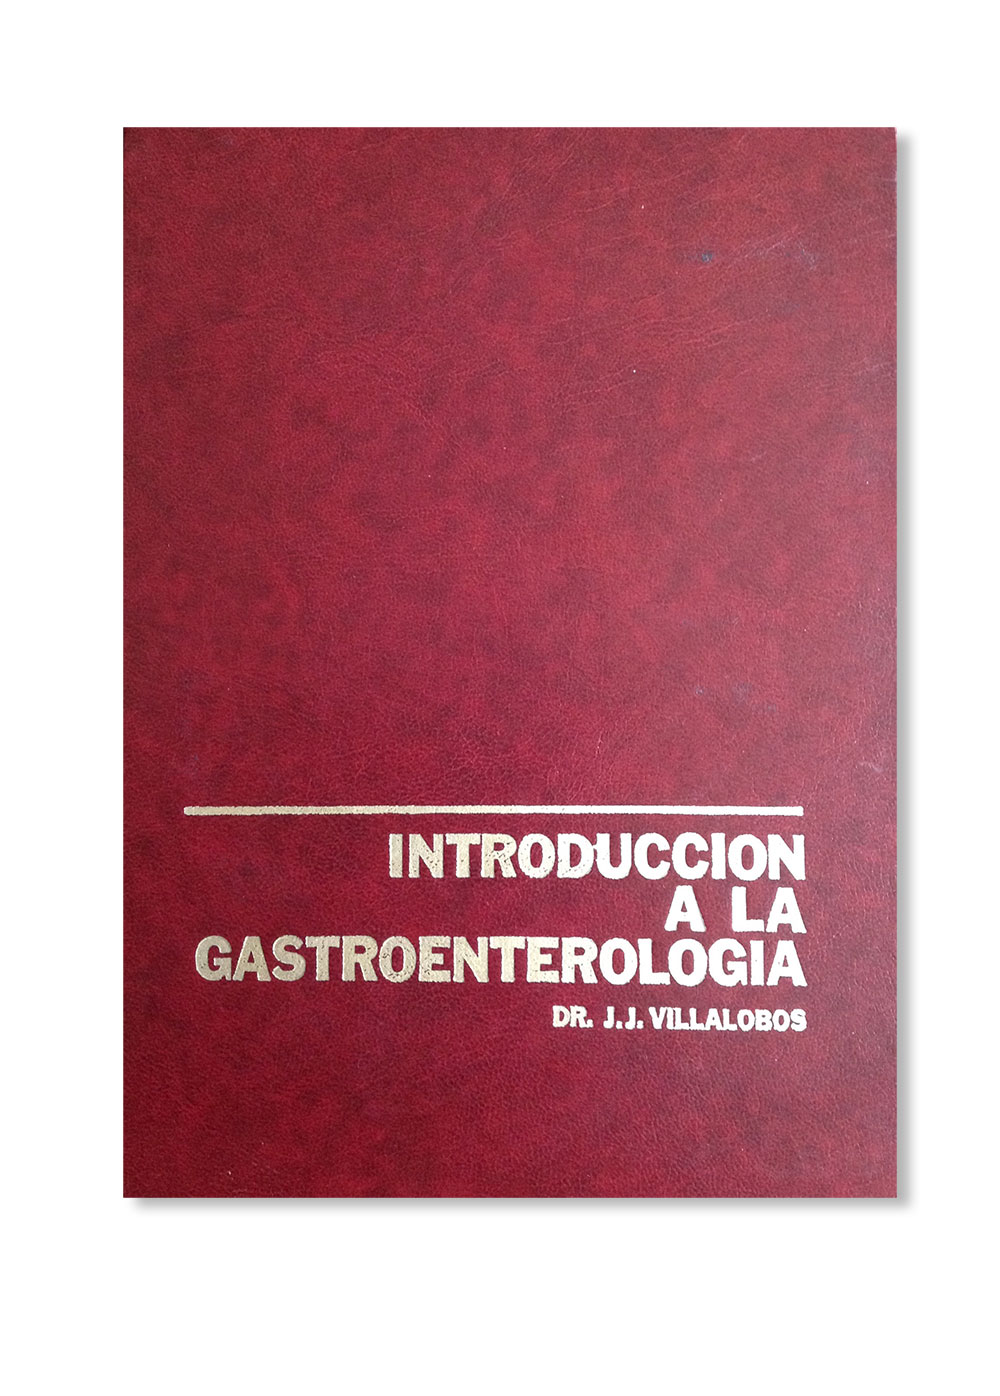 gastroenterologia villalobos 6 edicion pdf 105